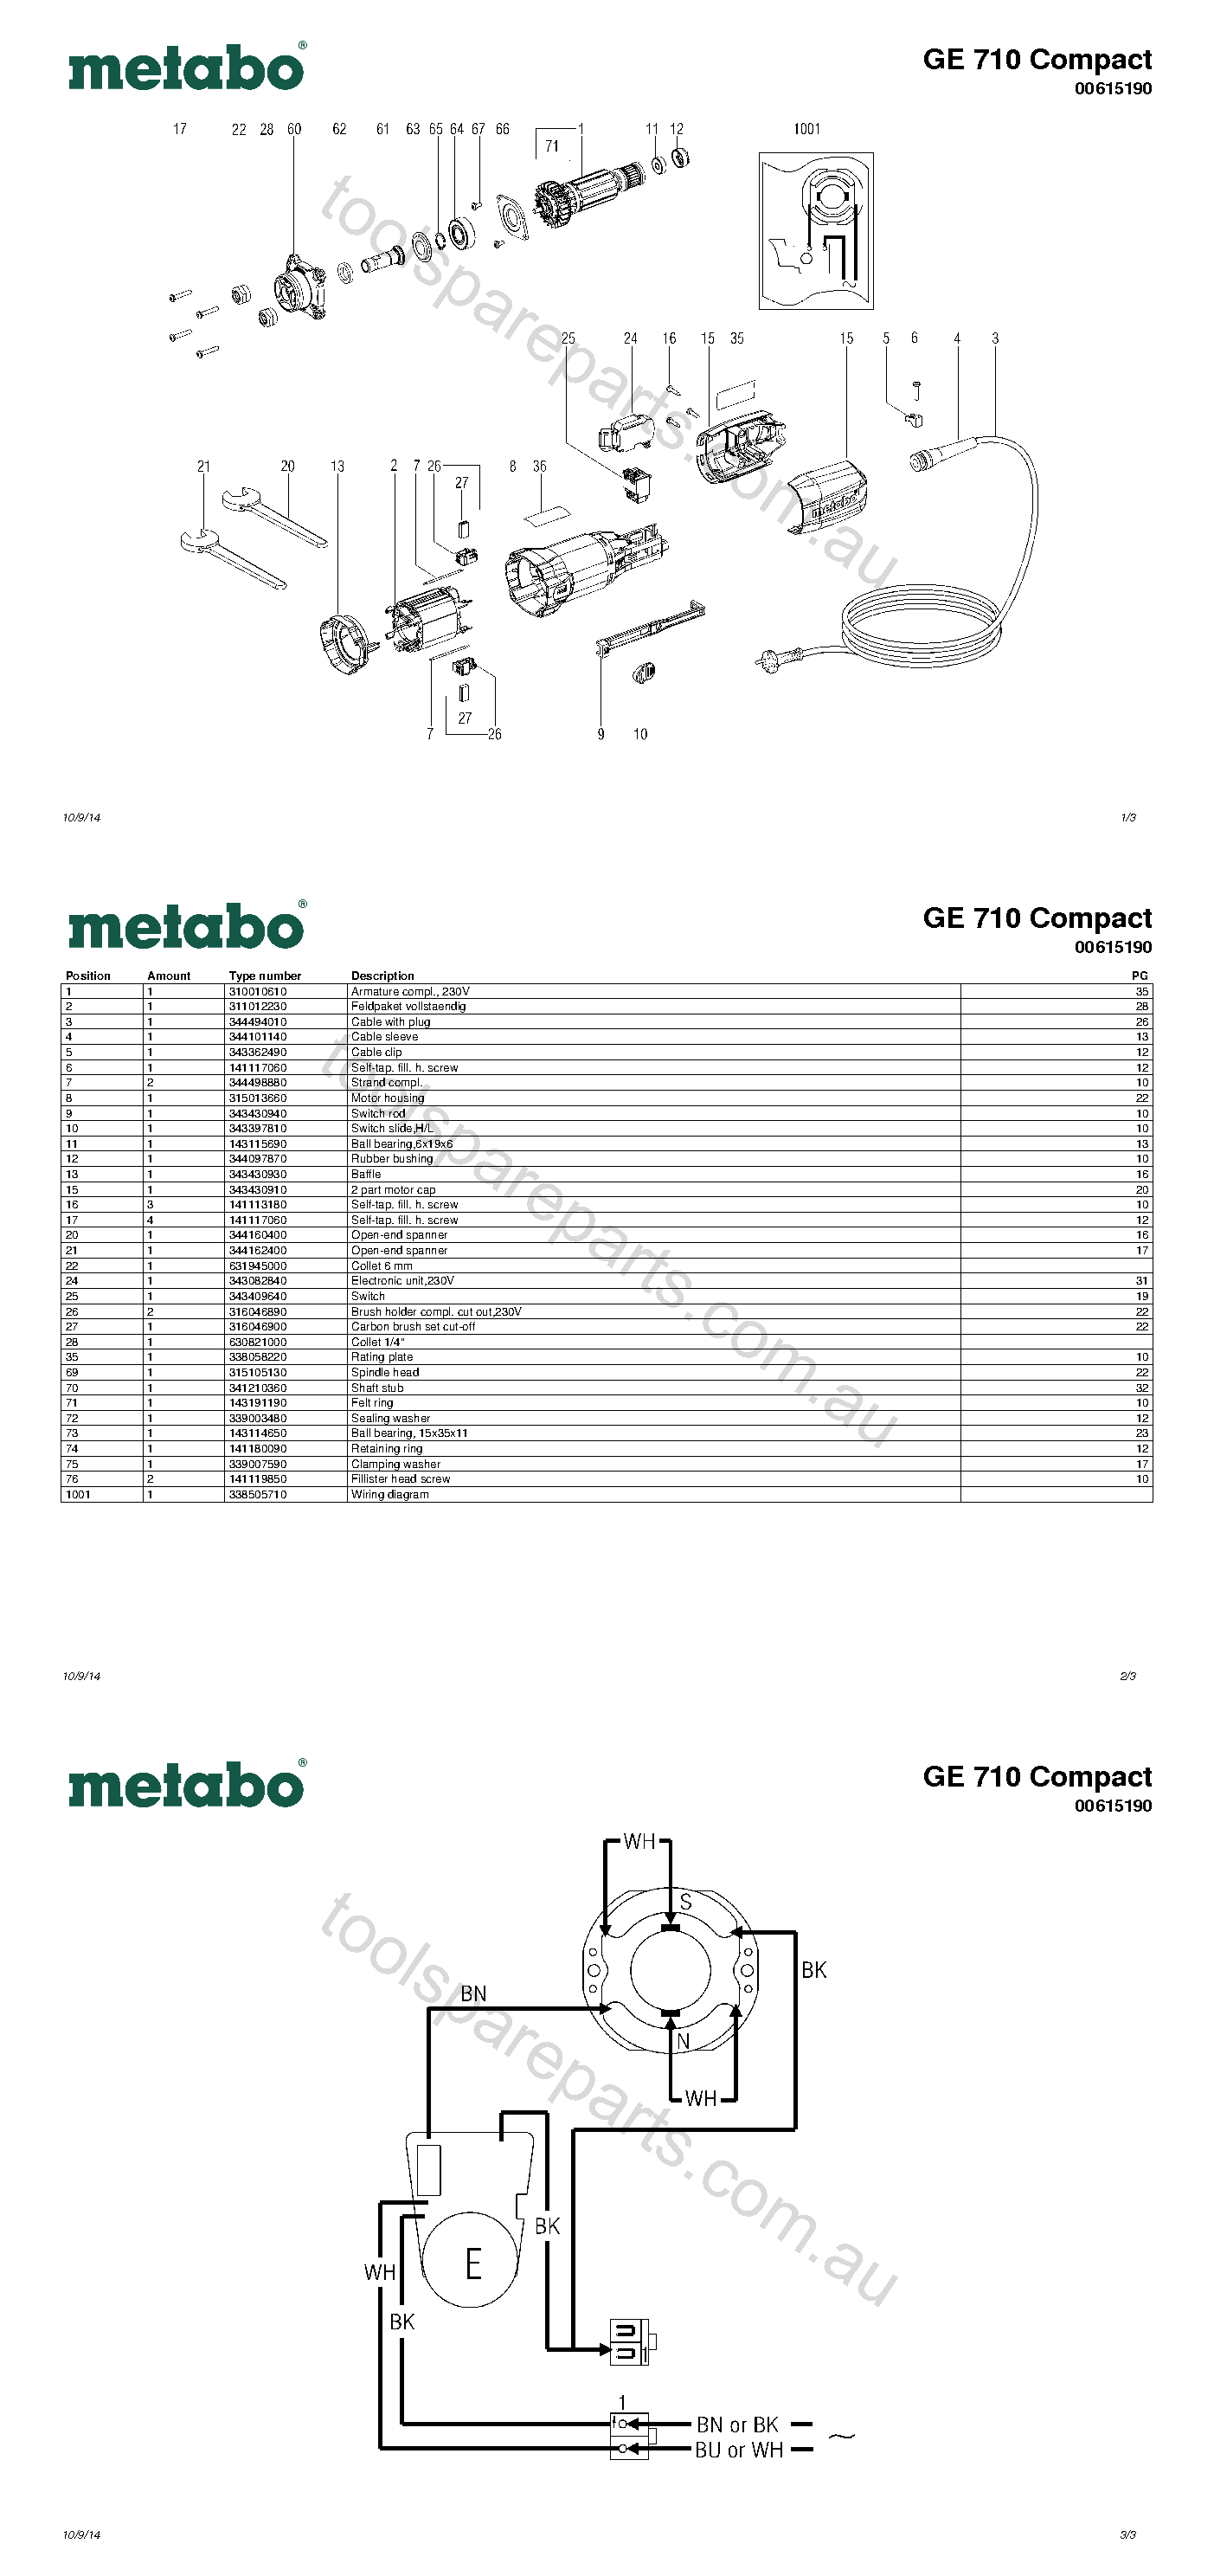 Metabo GE 710 Compact 00615190  Diagram 1